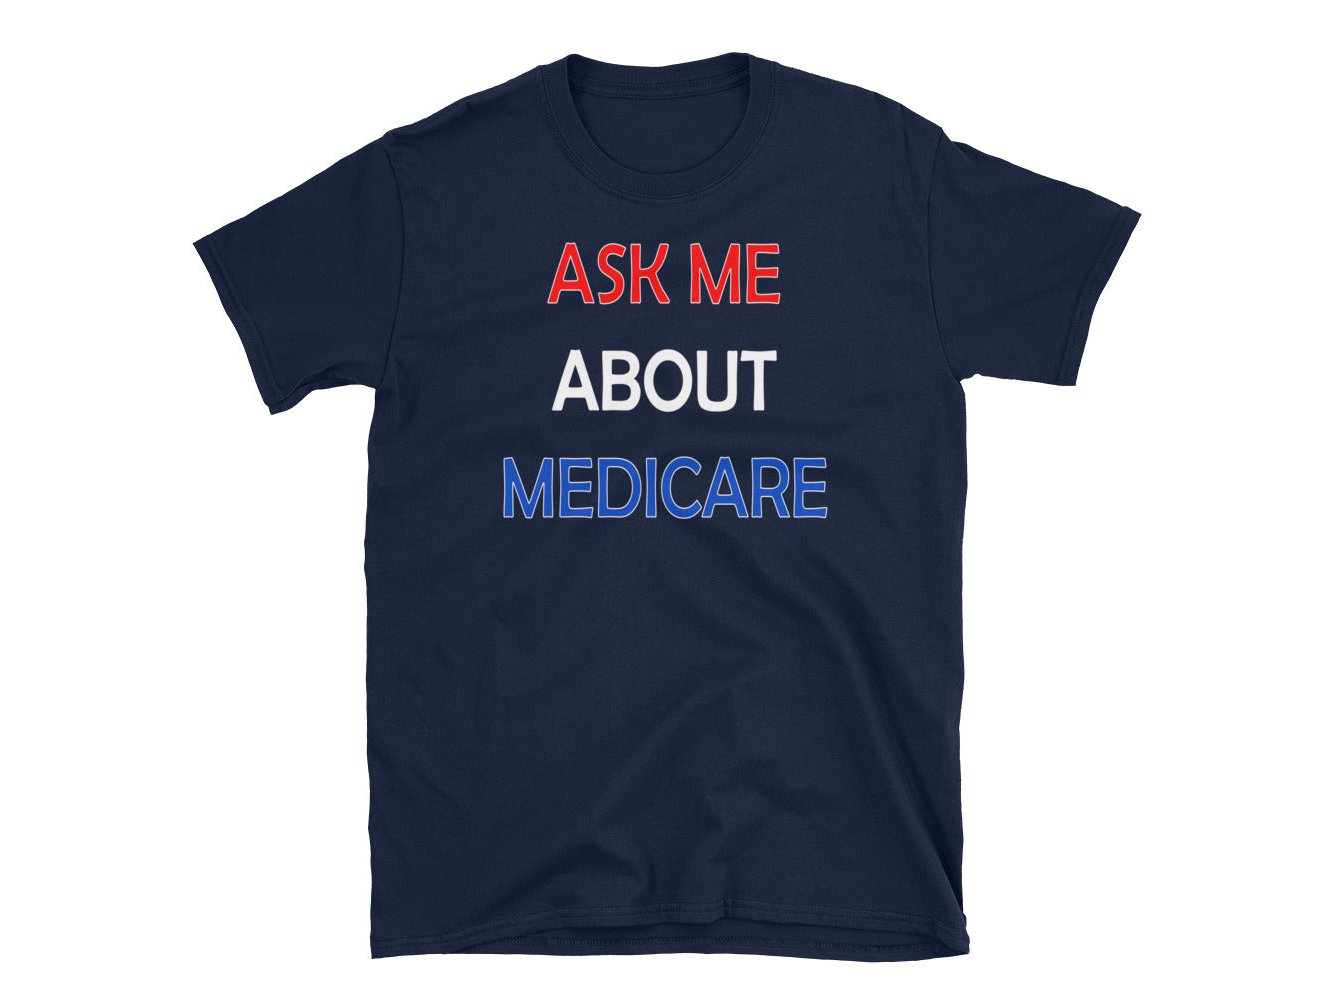 Ask Me About Medicare Insurance Agent Broker Sales Marketing T-Shirt